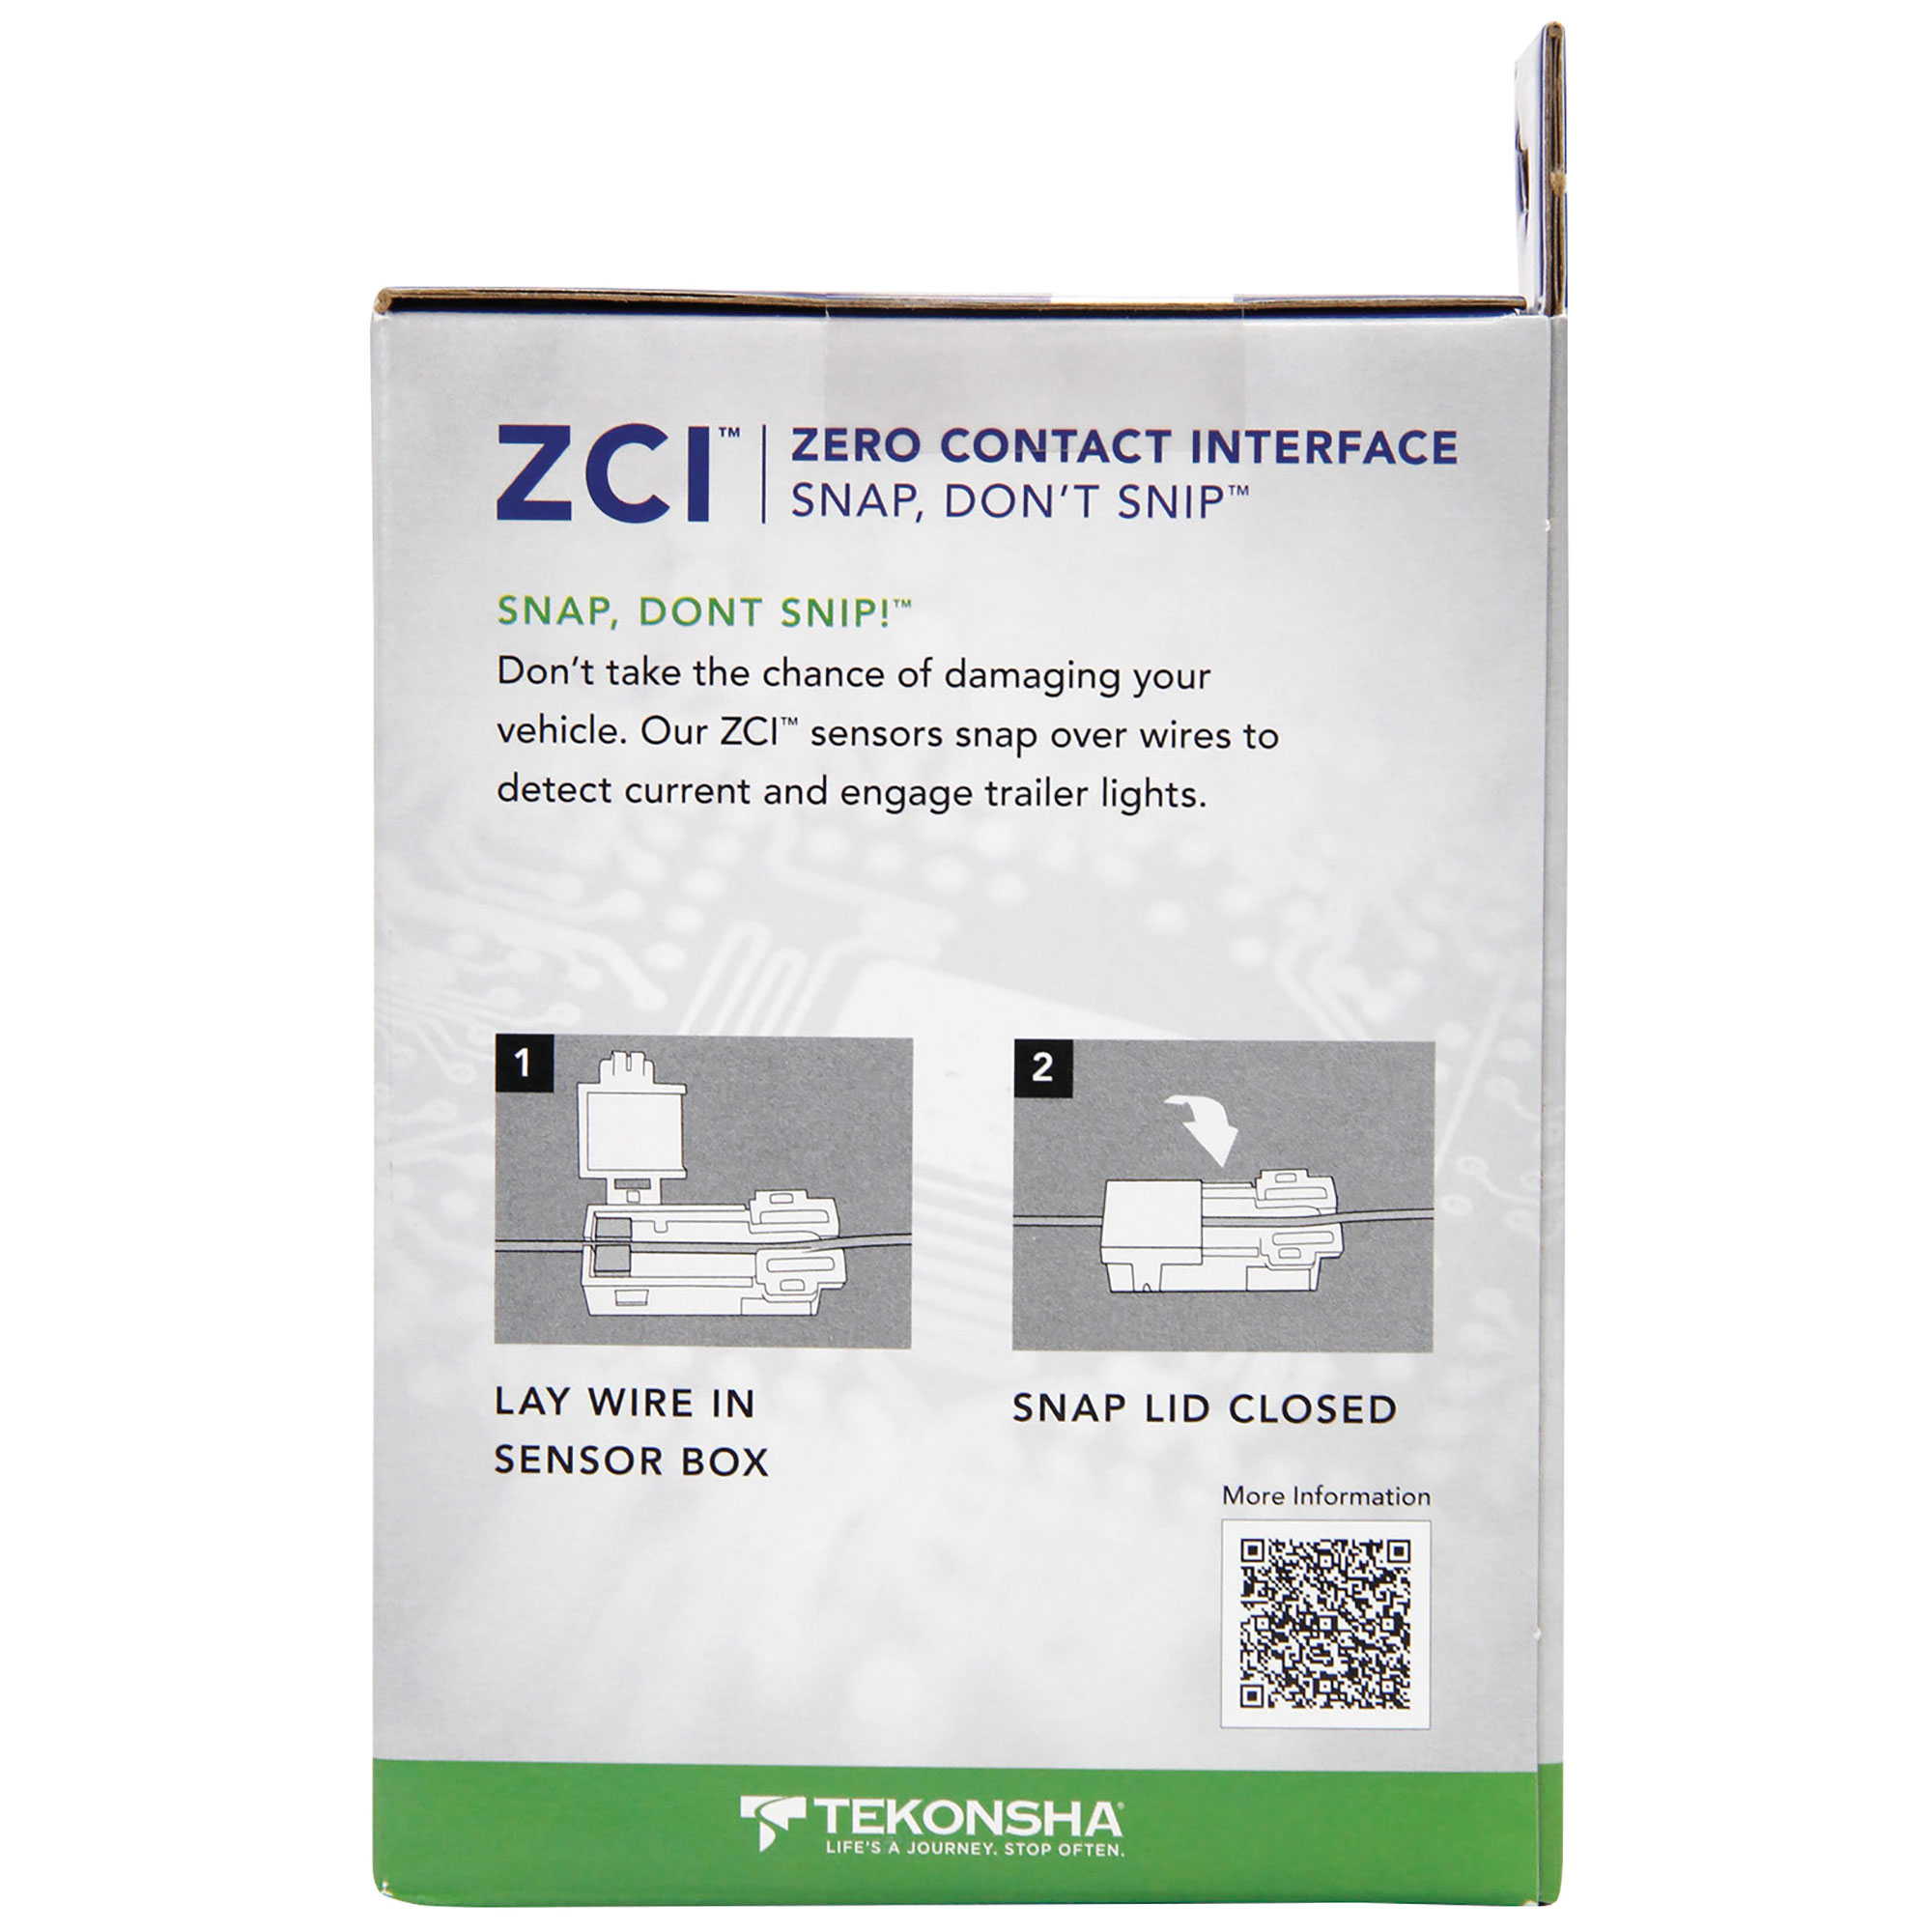 zci zero contact modulite installation kit